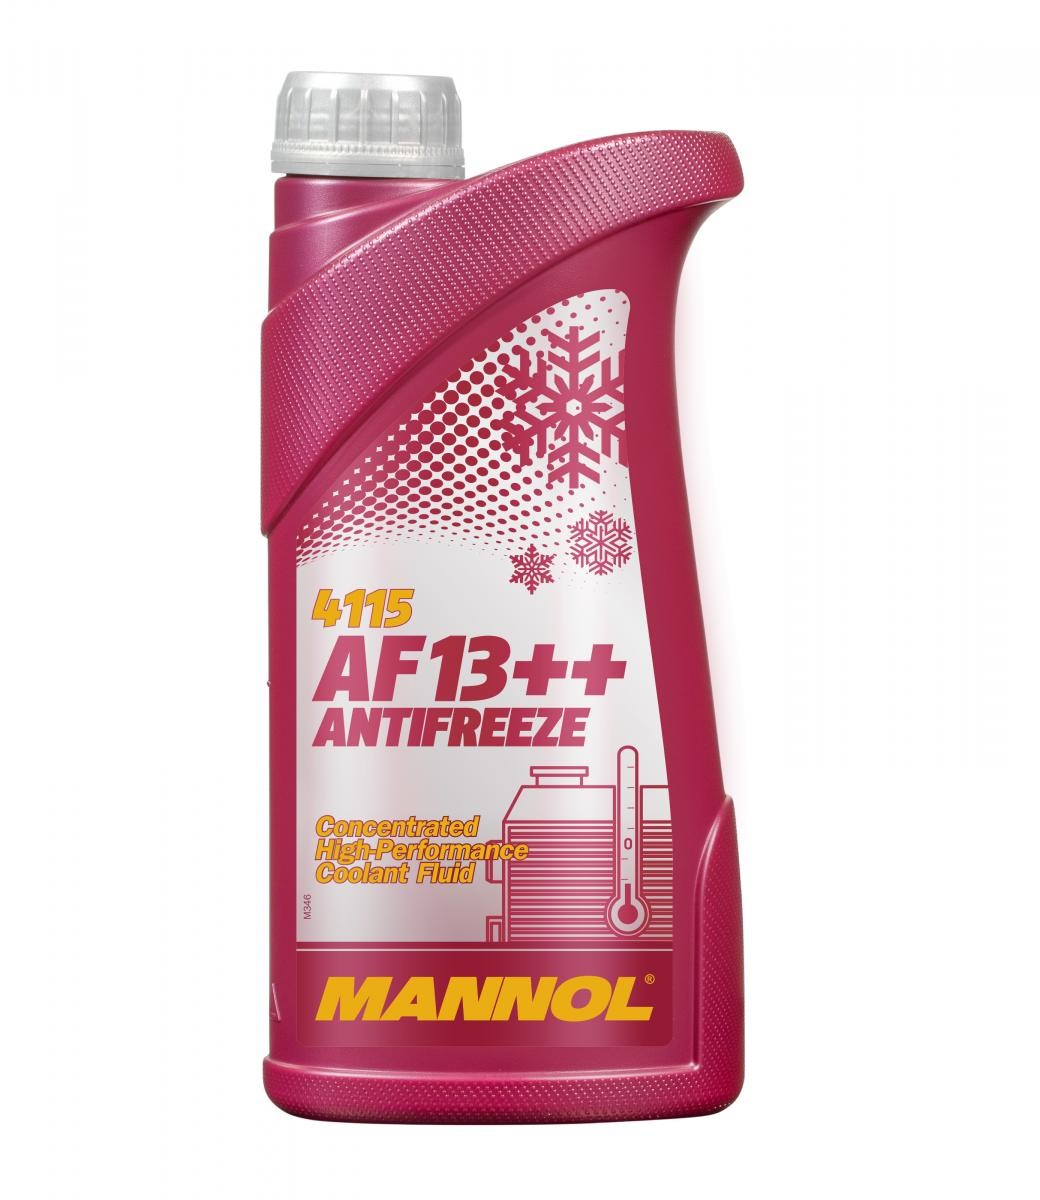 HERCULES GIPSY Kühlmittel G12 Rot, 1l, -38(50/50) MANNOL AF13++, High-performance MN4115-1